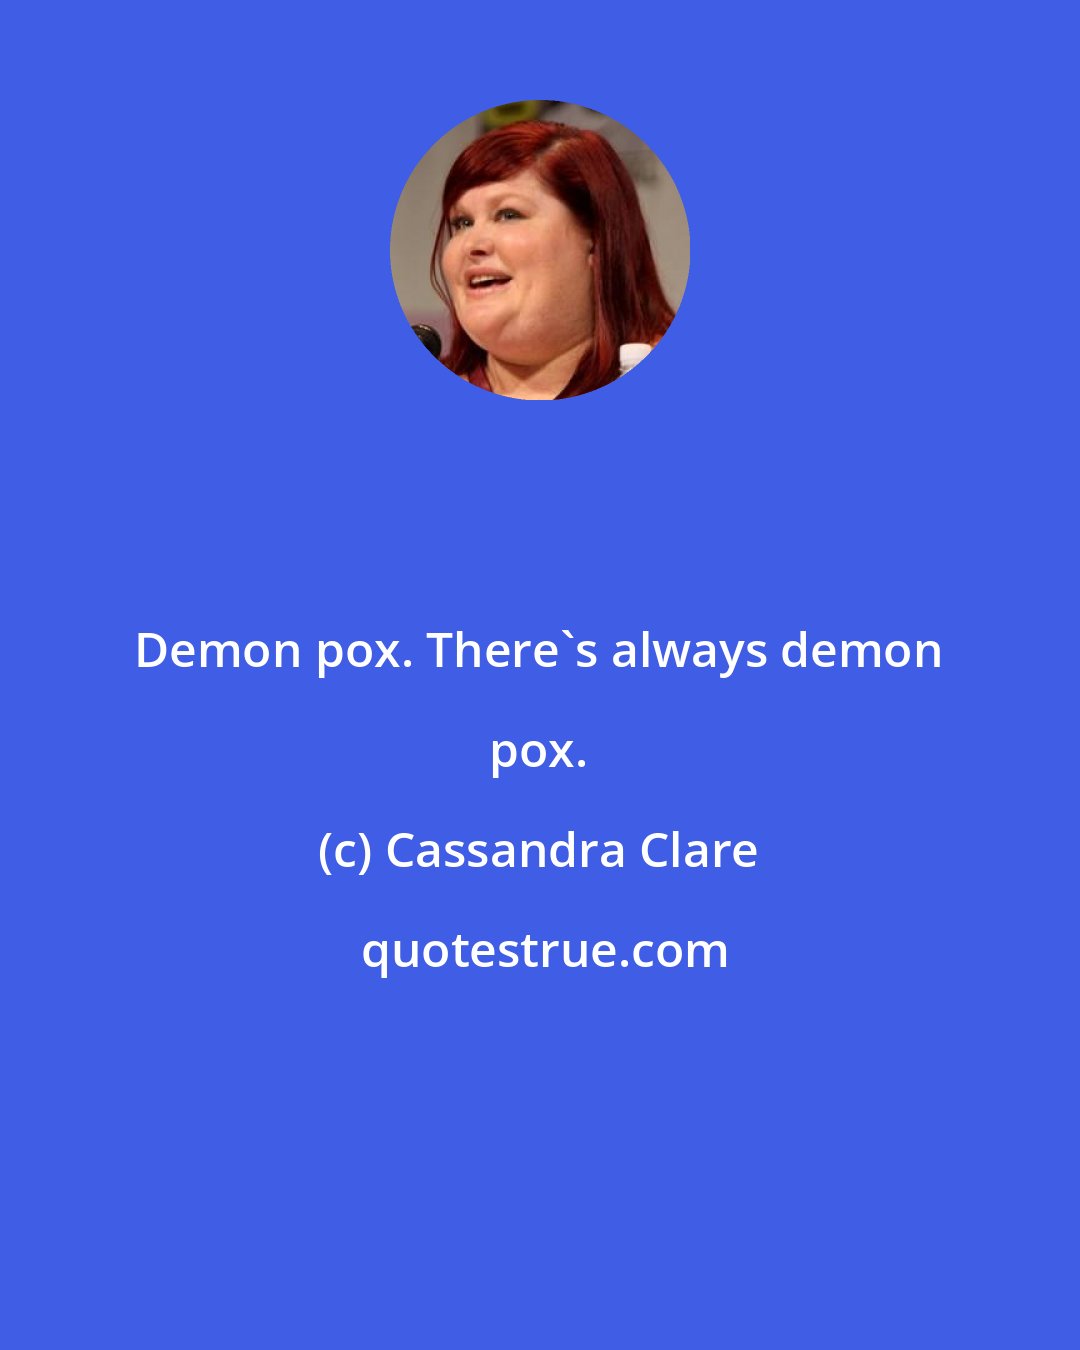 Cassandra Clare: Demon pox. There's always demon pox.